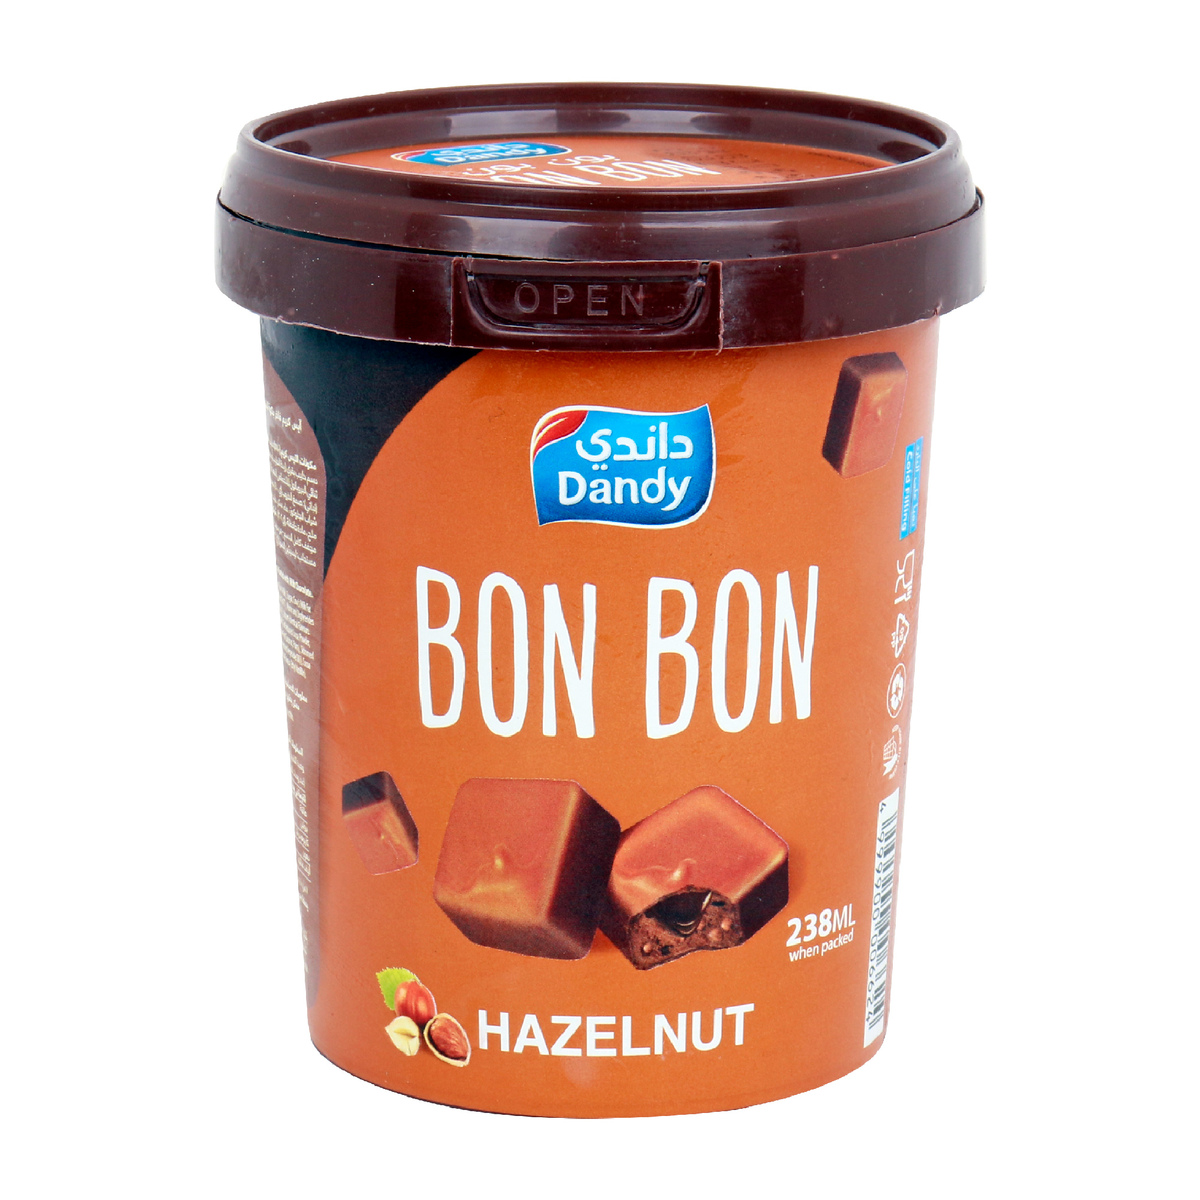 Dandy Ice Cream Bon Bon Hazelnut 238ml